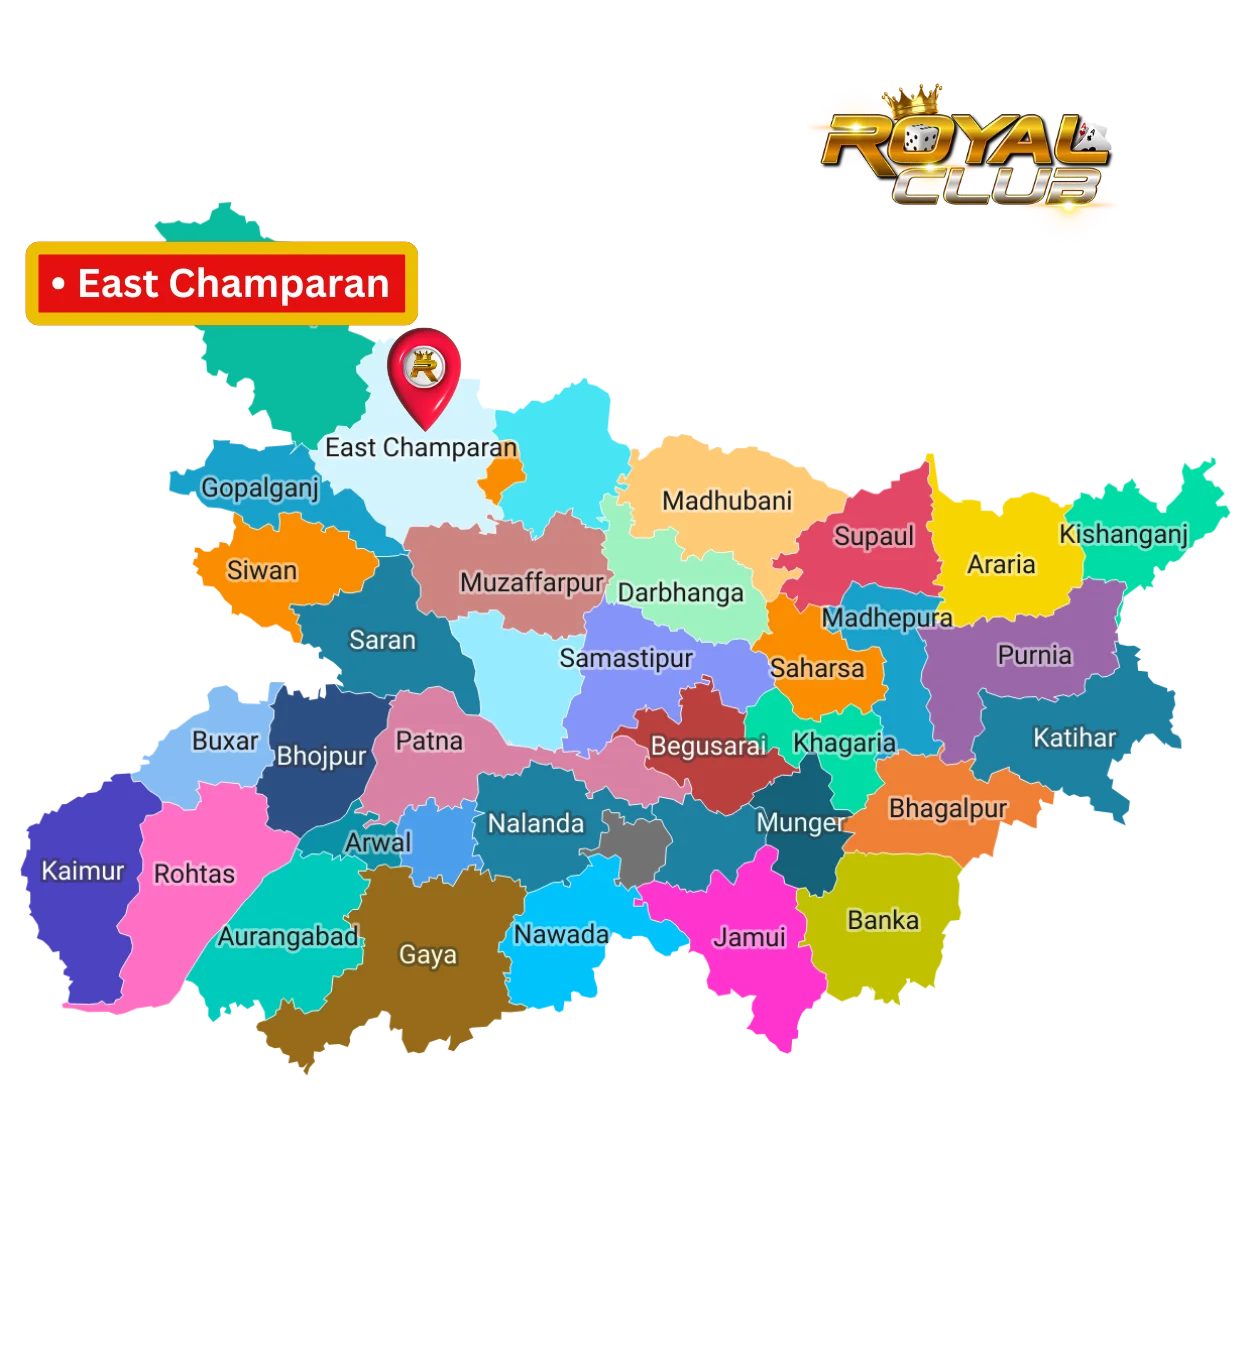 Aviator Game in East Champaran